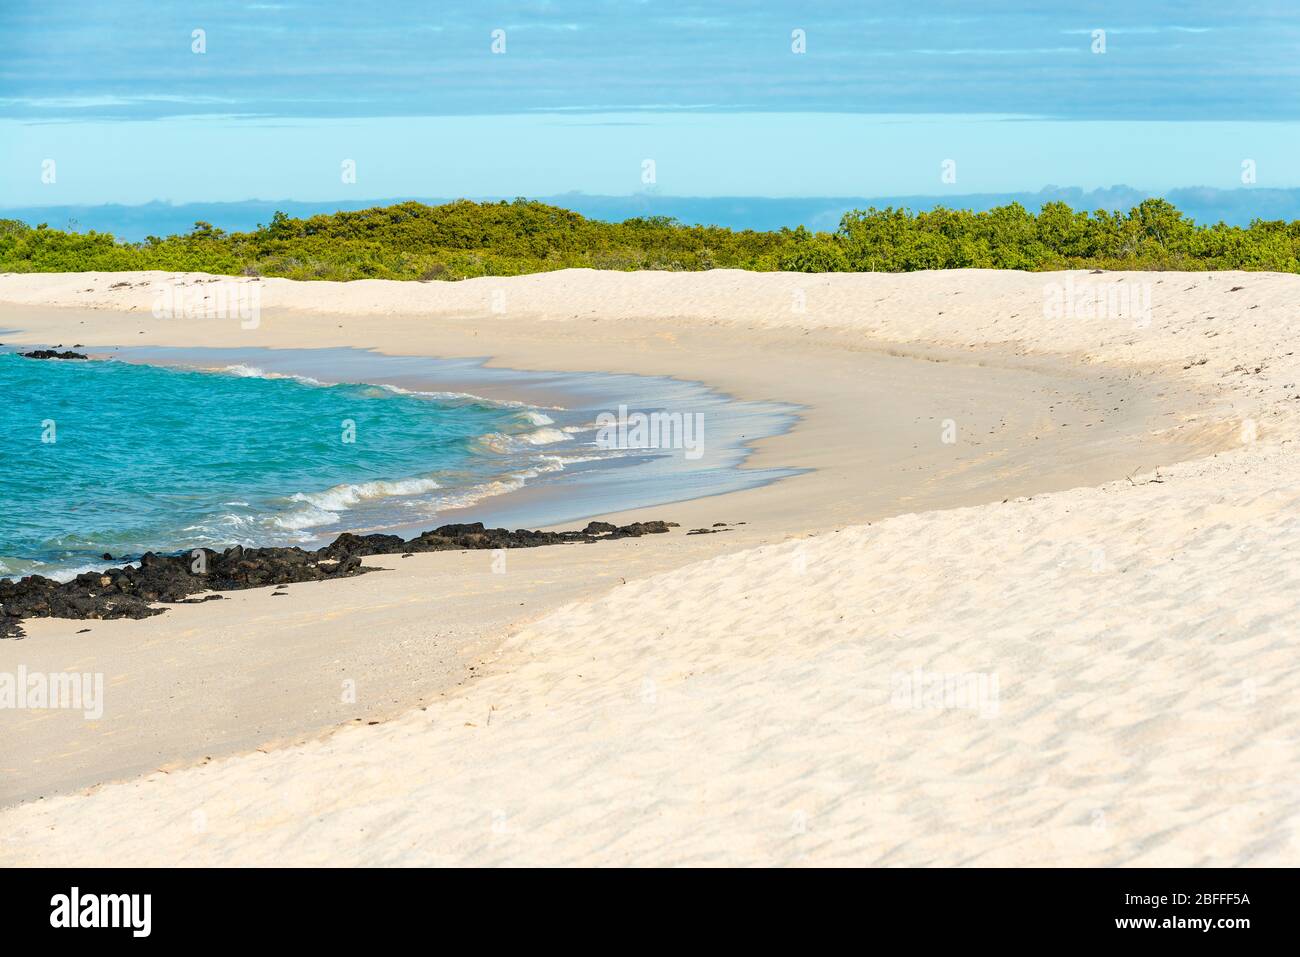 Playas las Bacchas Beach auf der Insel Santa Cruz am Pazifik, Galapagos Nationalpark, Ecuador. Stockfoto